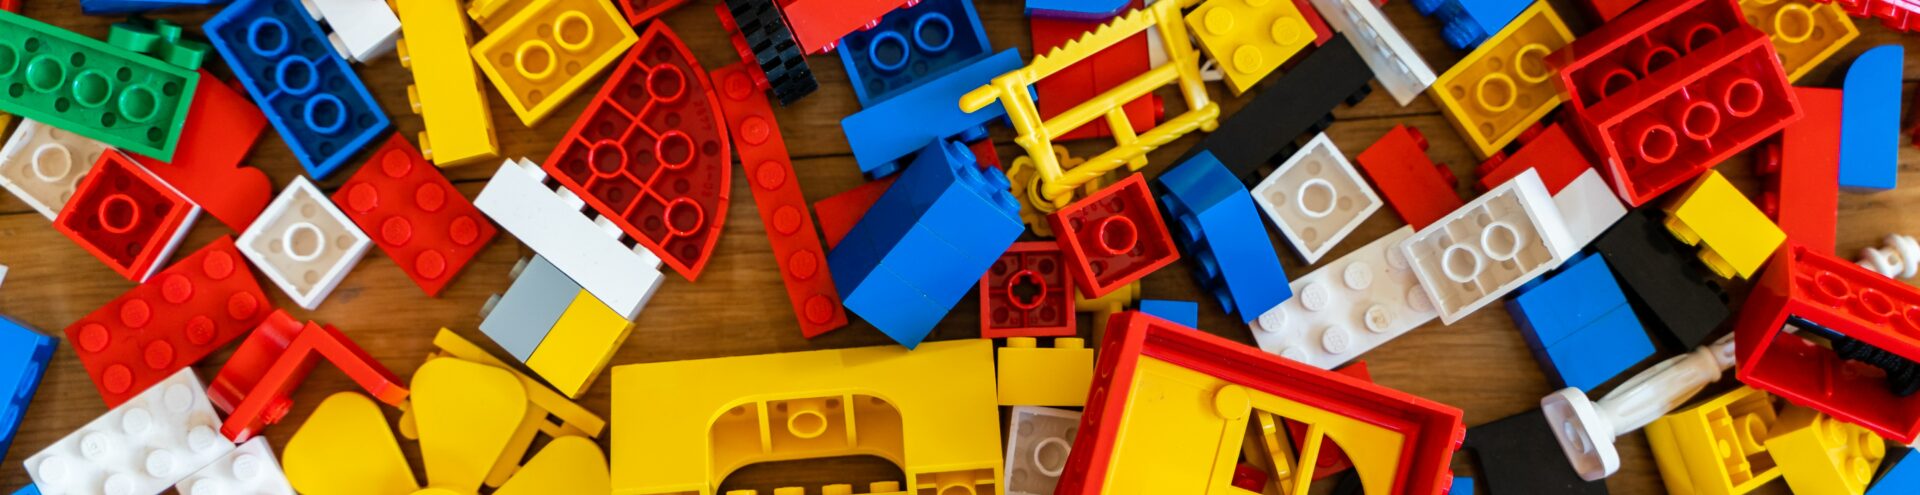 color toy blocks